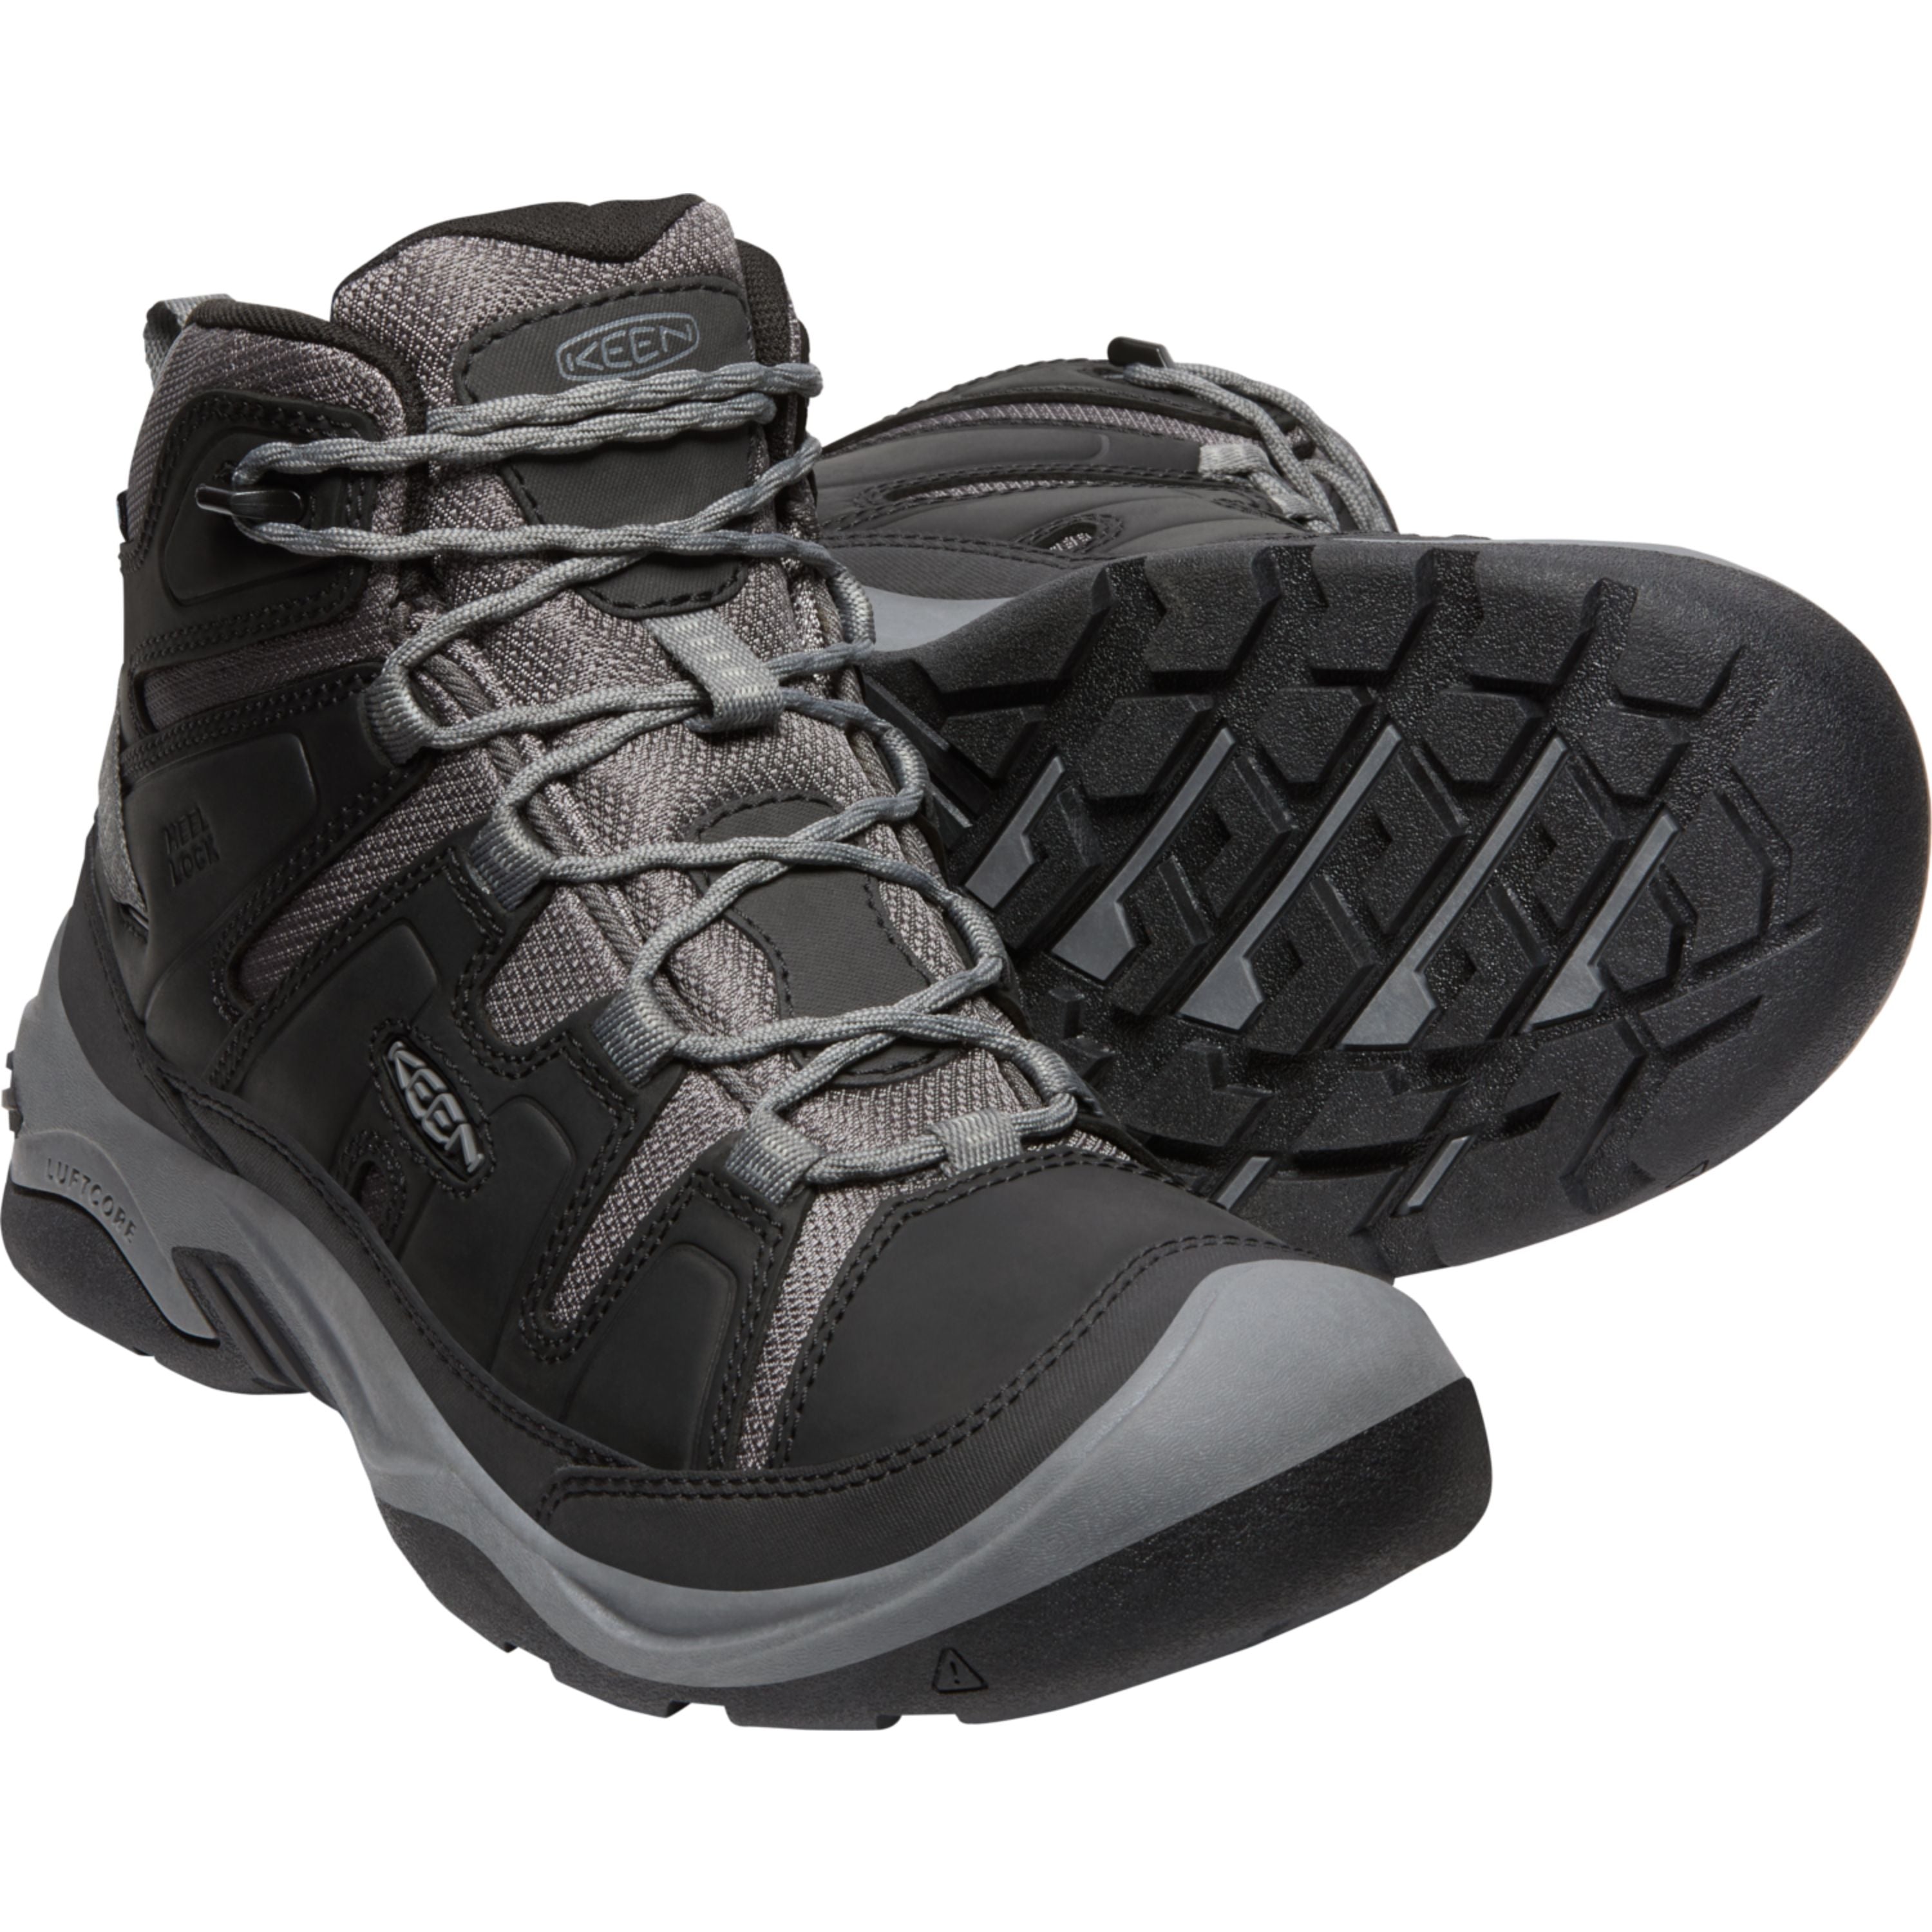 Circadia Mid WP hiking boots - Men's